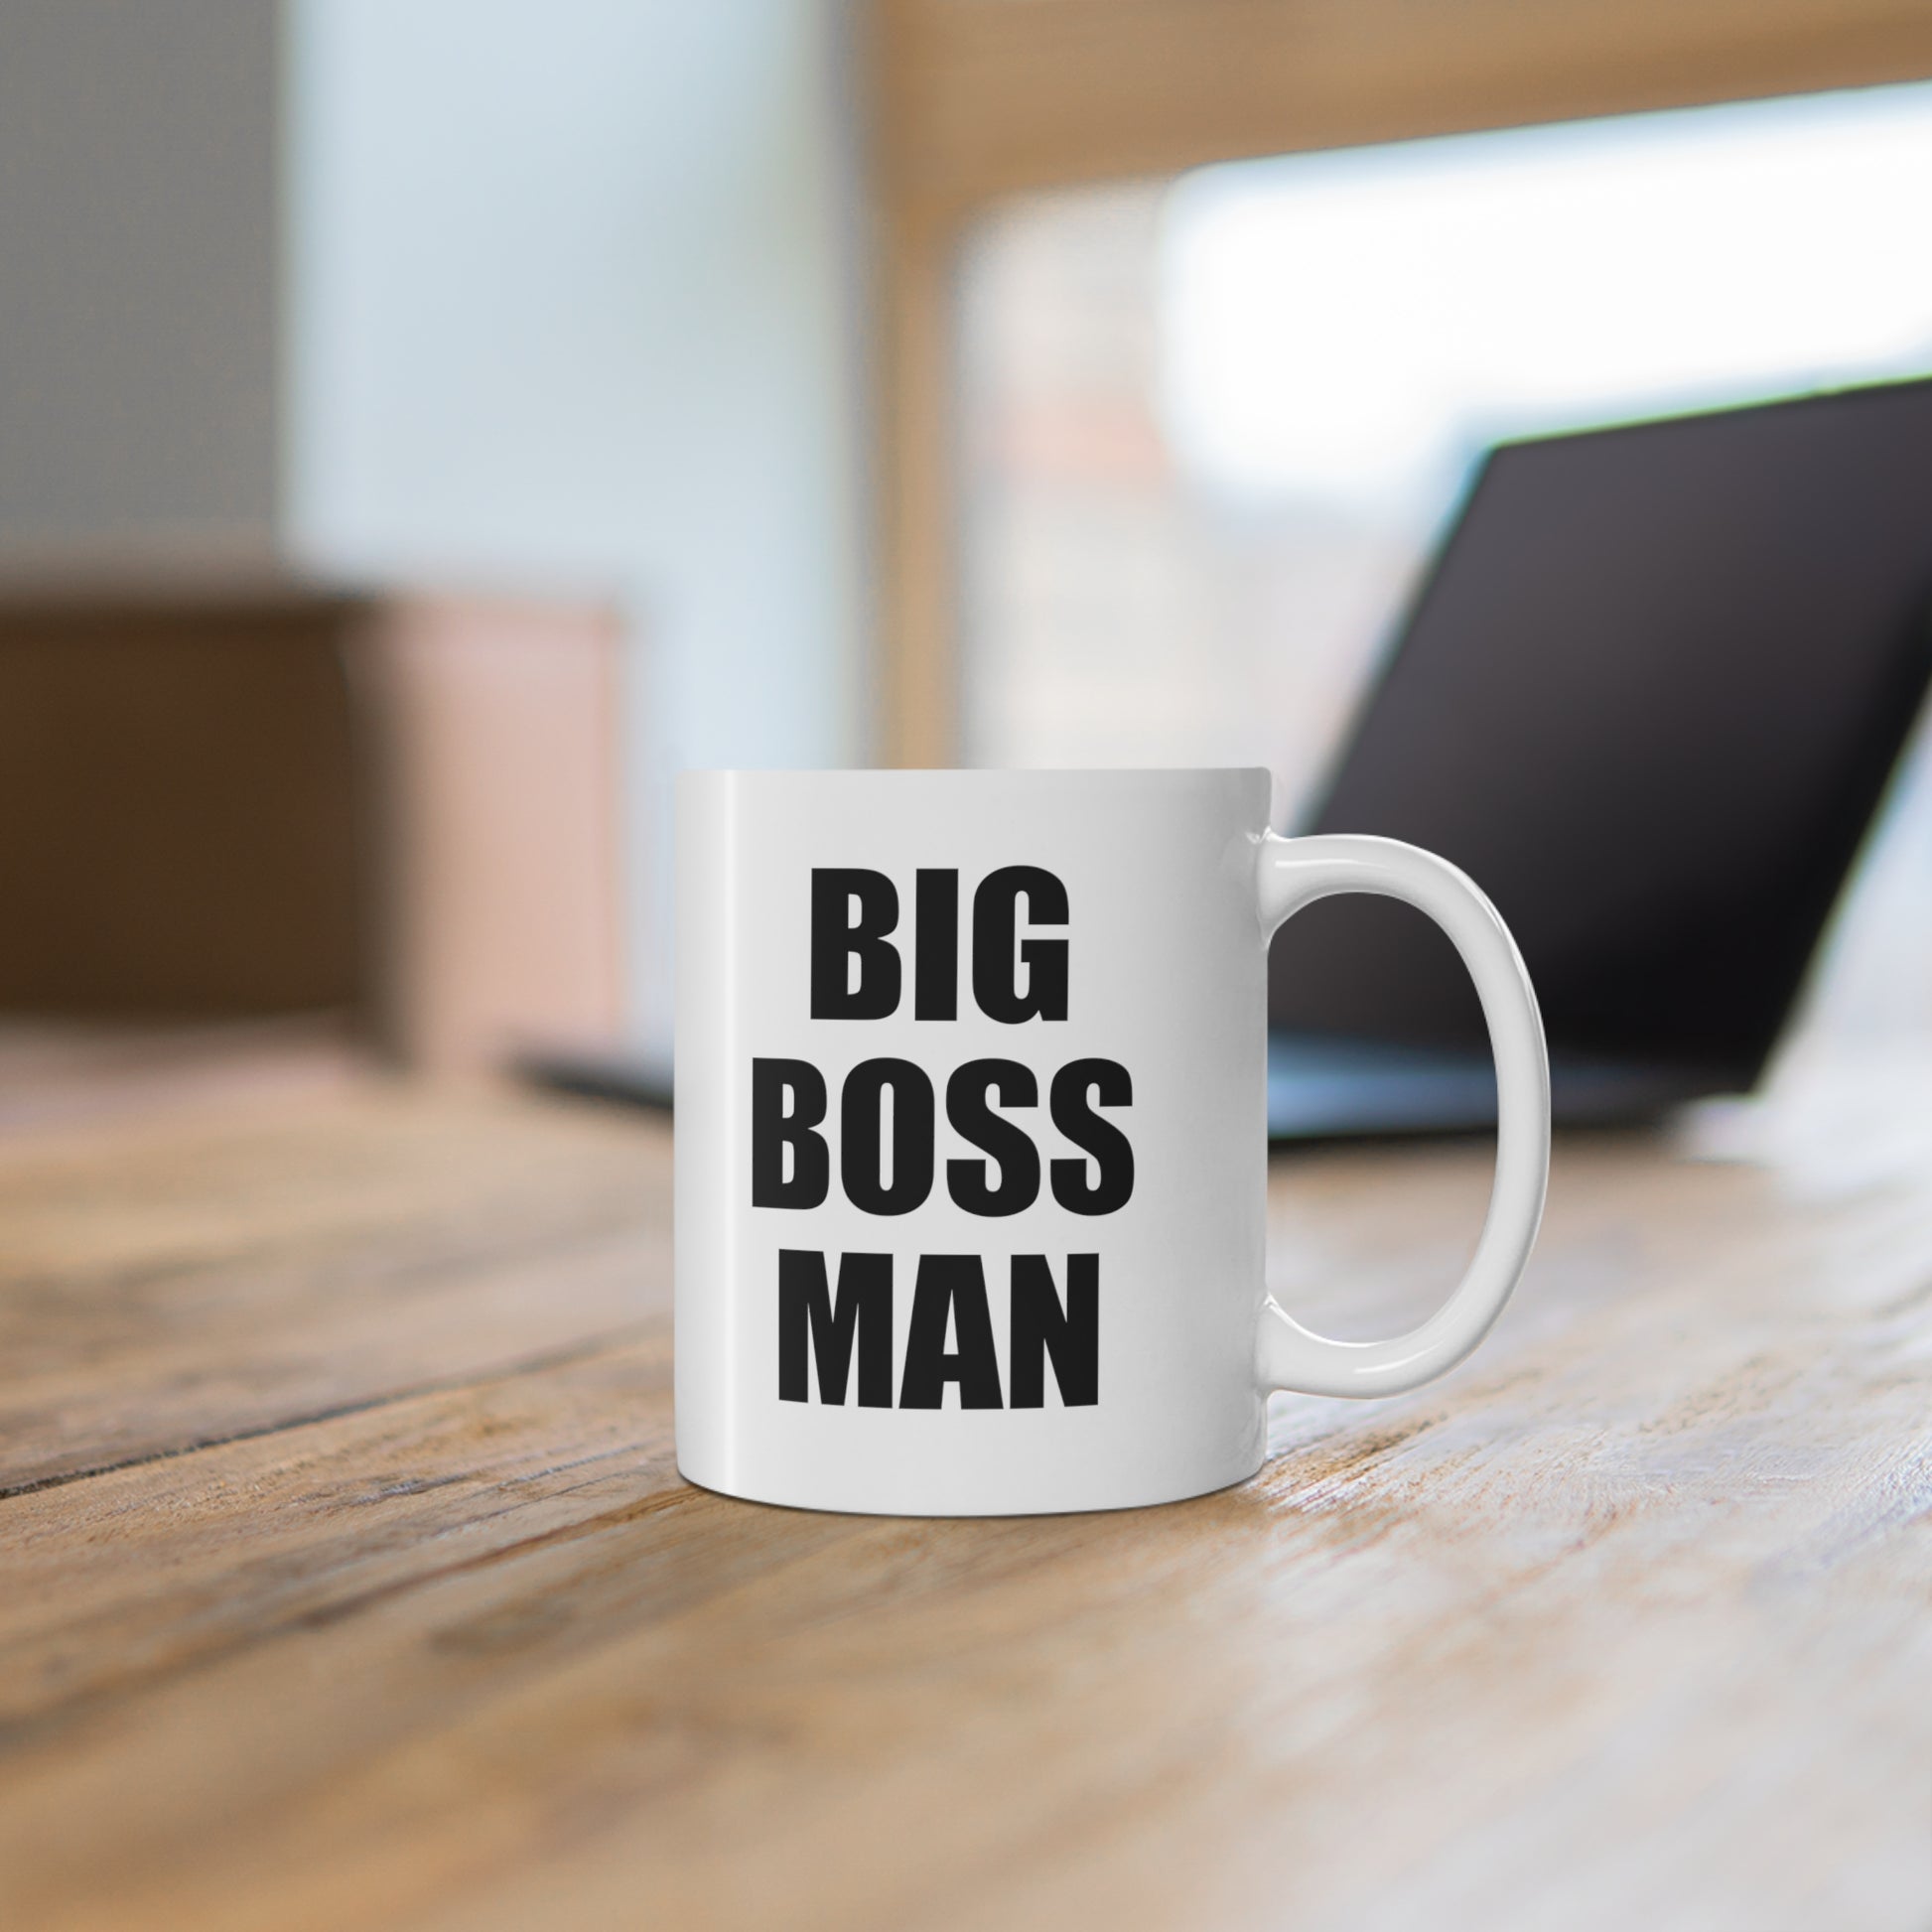 11oz ceramic mug with quote Big Boss Man